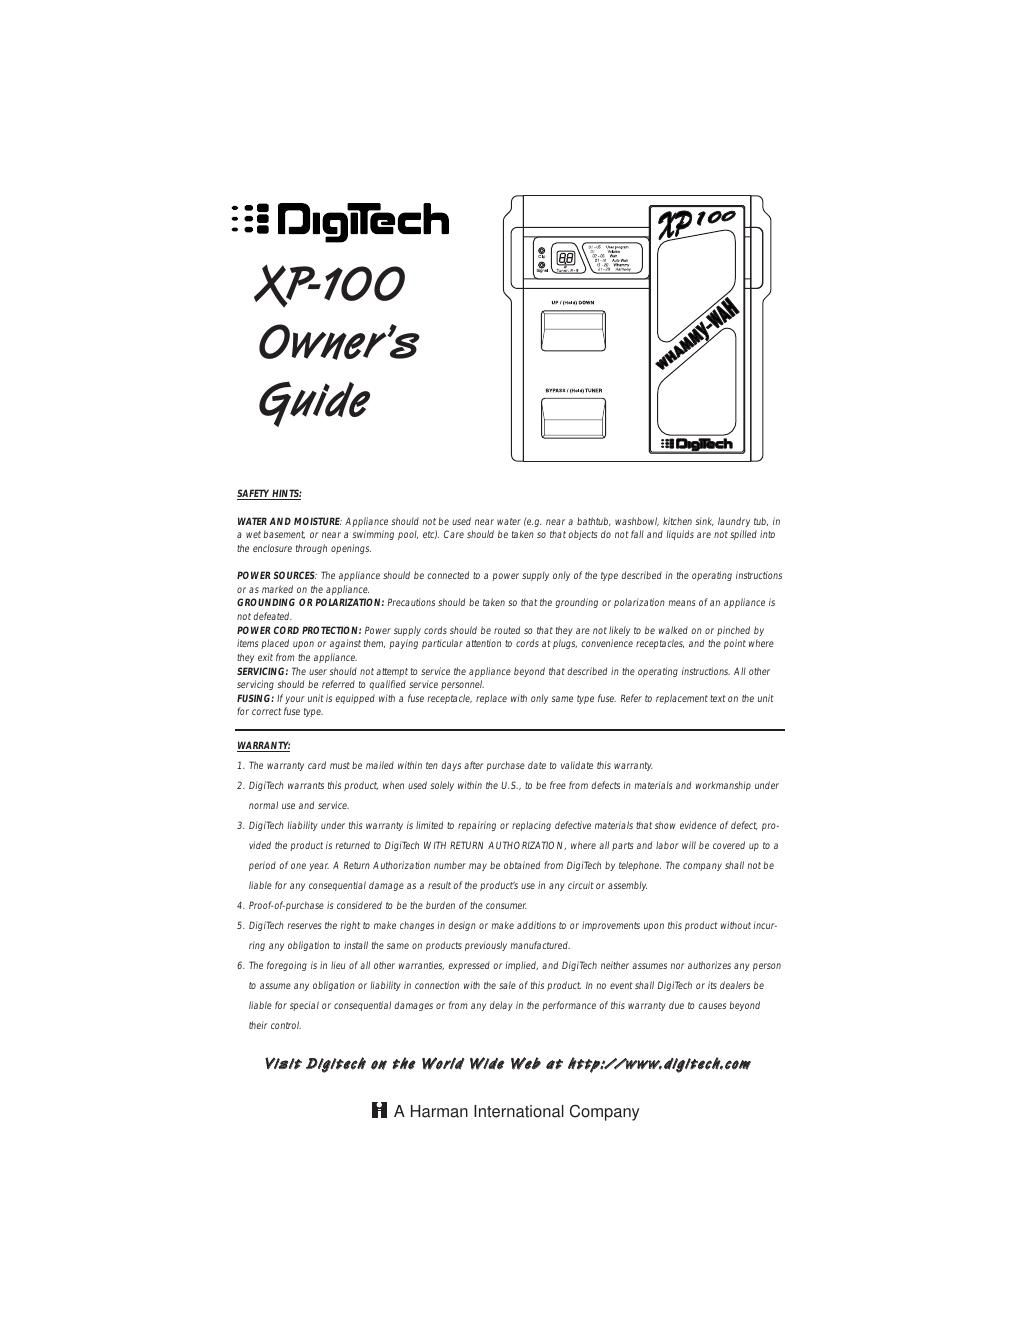 digitech xp 100 owner guide